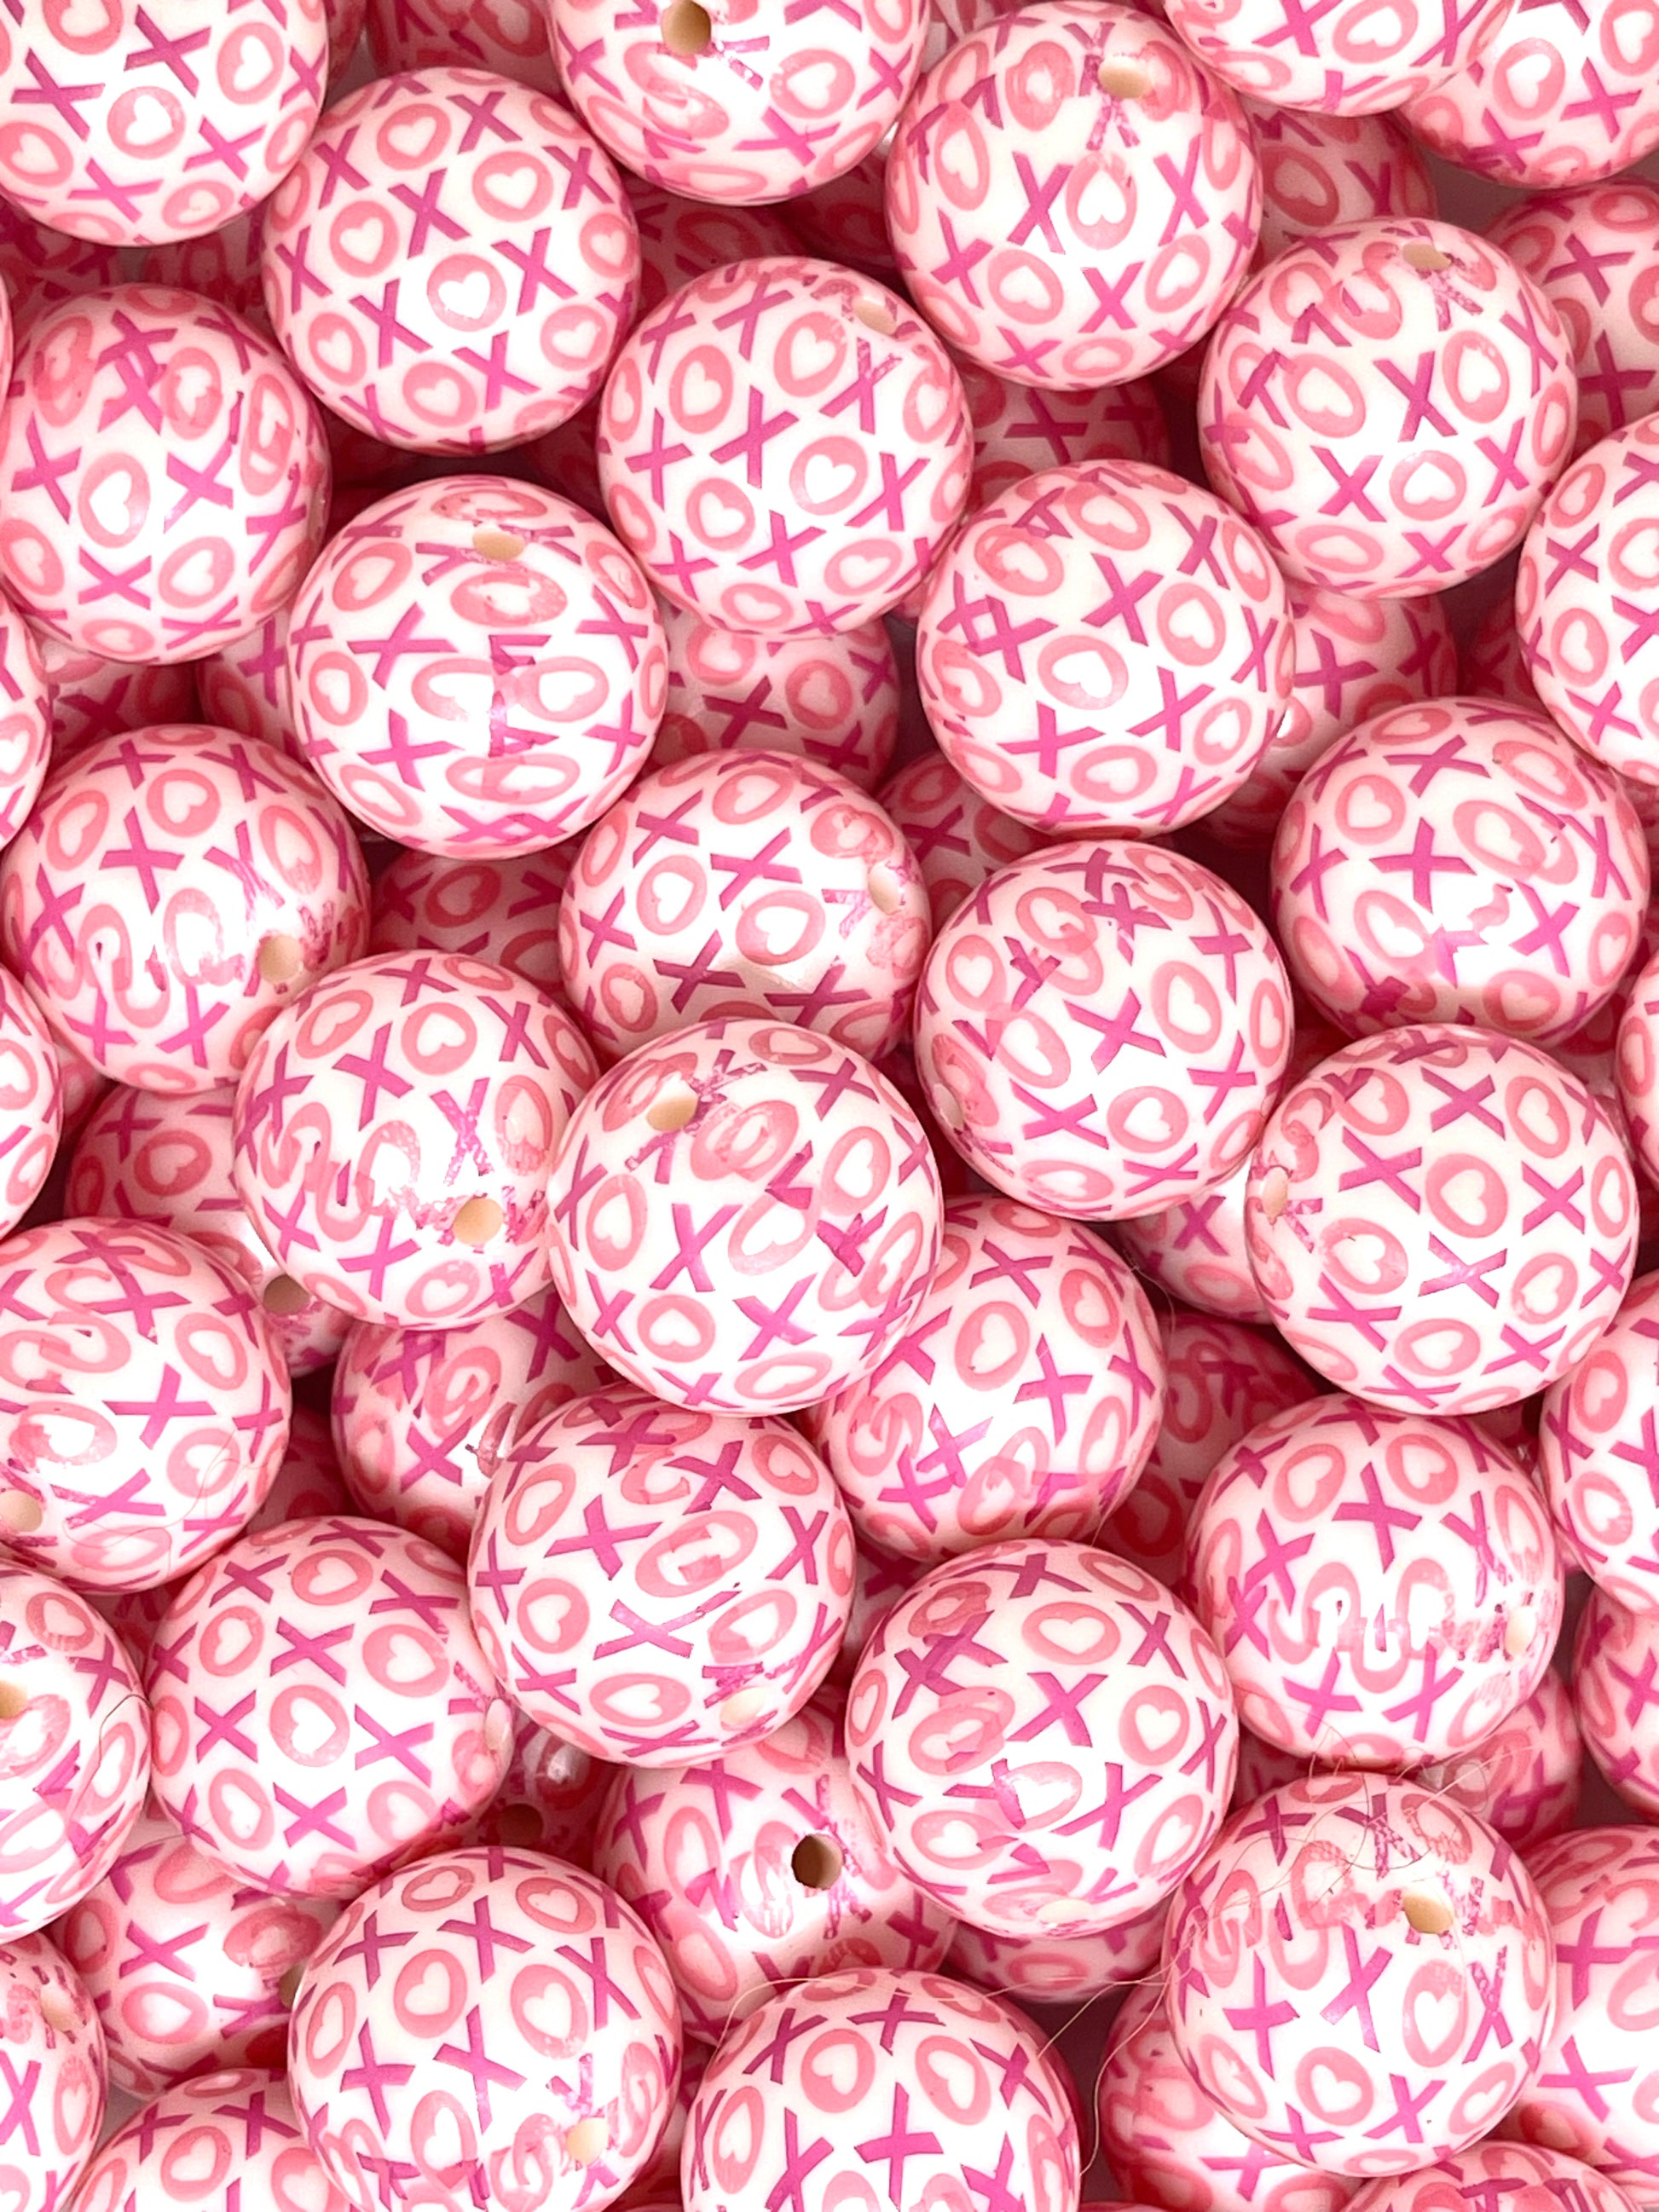 XOXO Print Acrylic Beads 20mm | Valentines Beads | Heart Printed Beads |  Valentine | Pink Beads